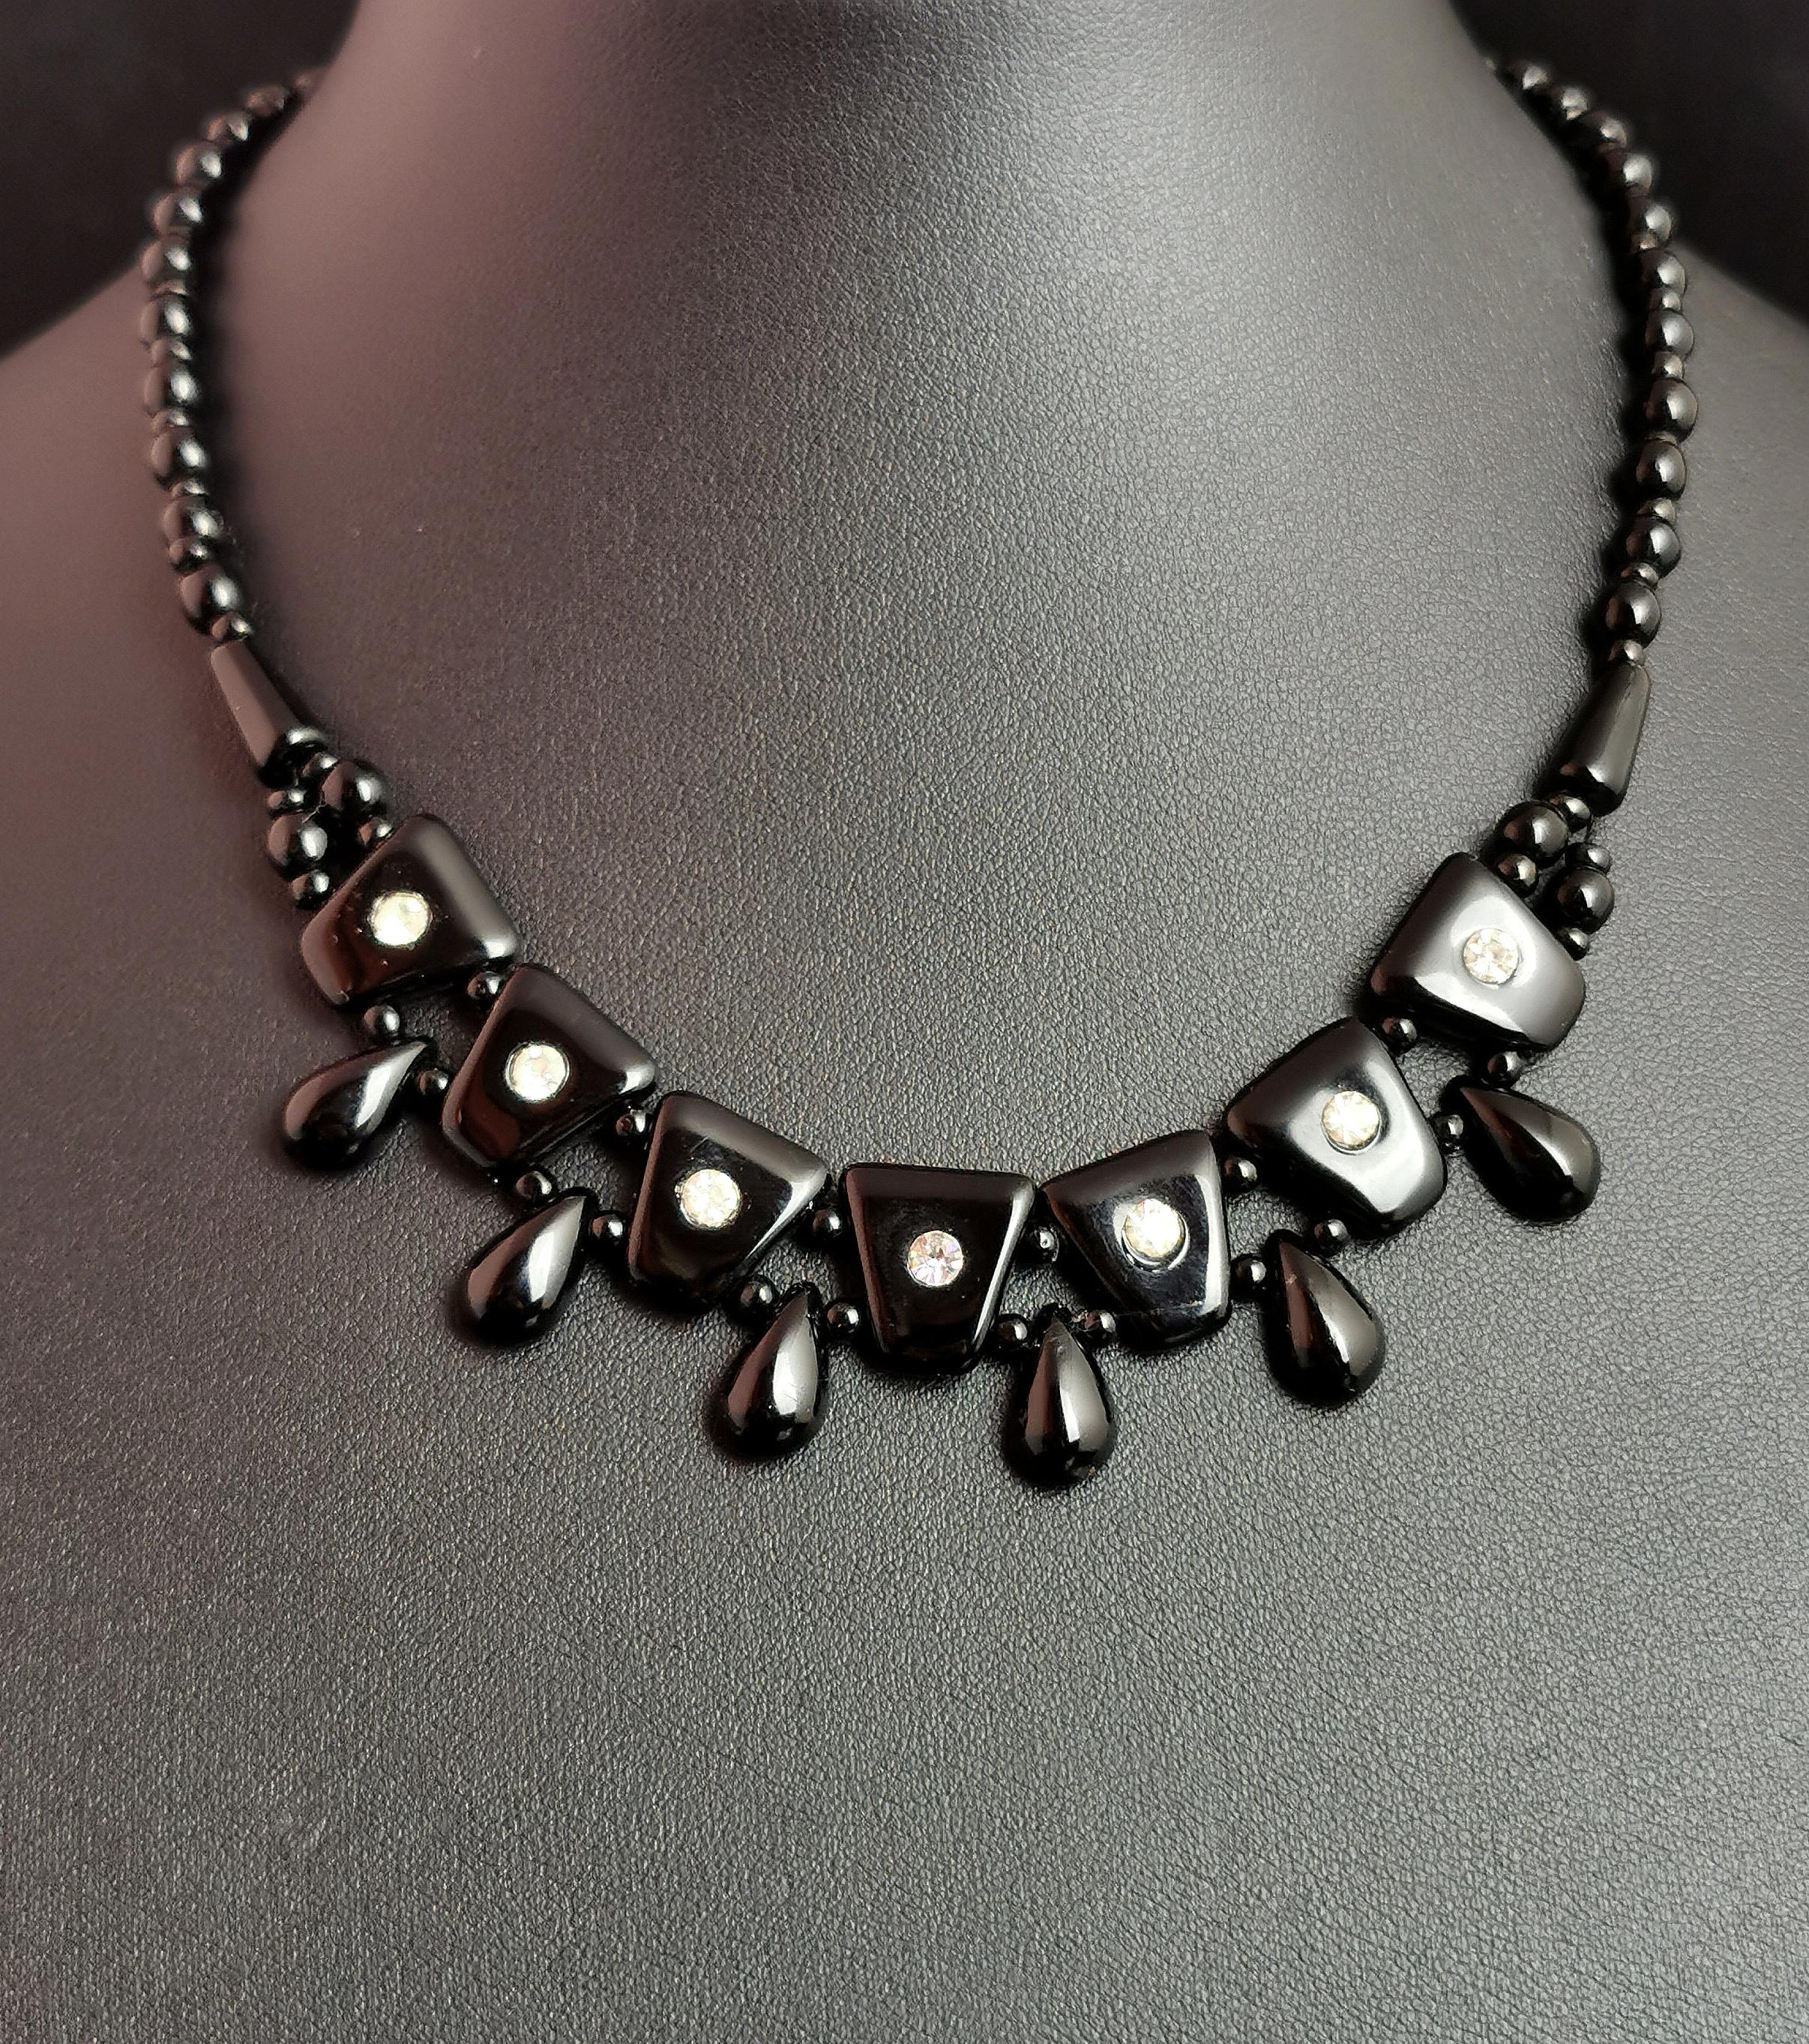 A gorgeous c1950s Art Deco style festoon necklace.

It is a shorter length necklace at 14